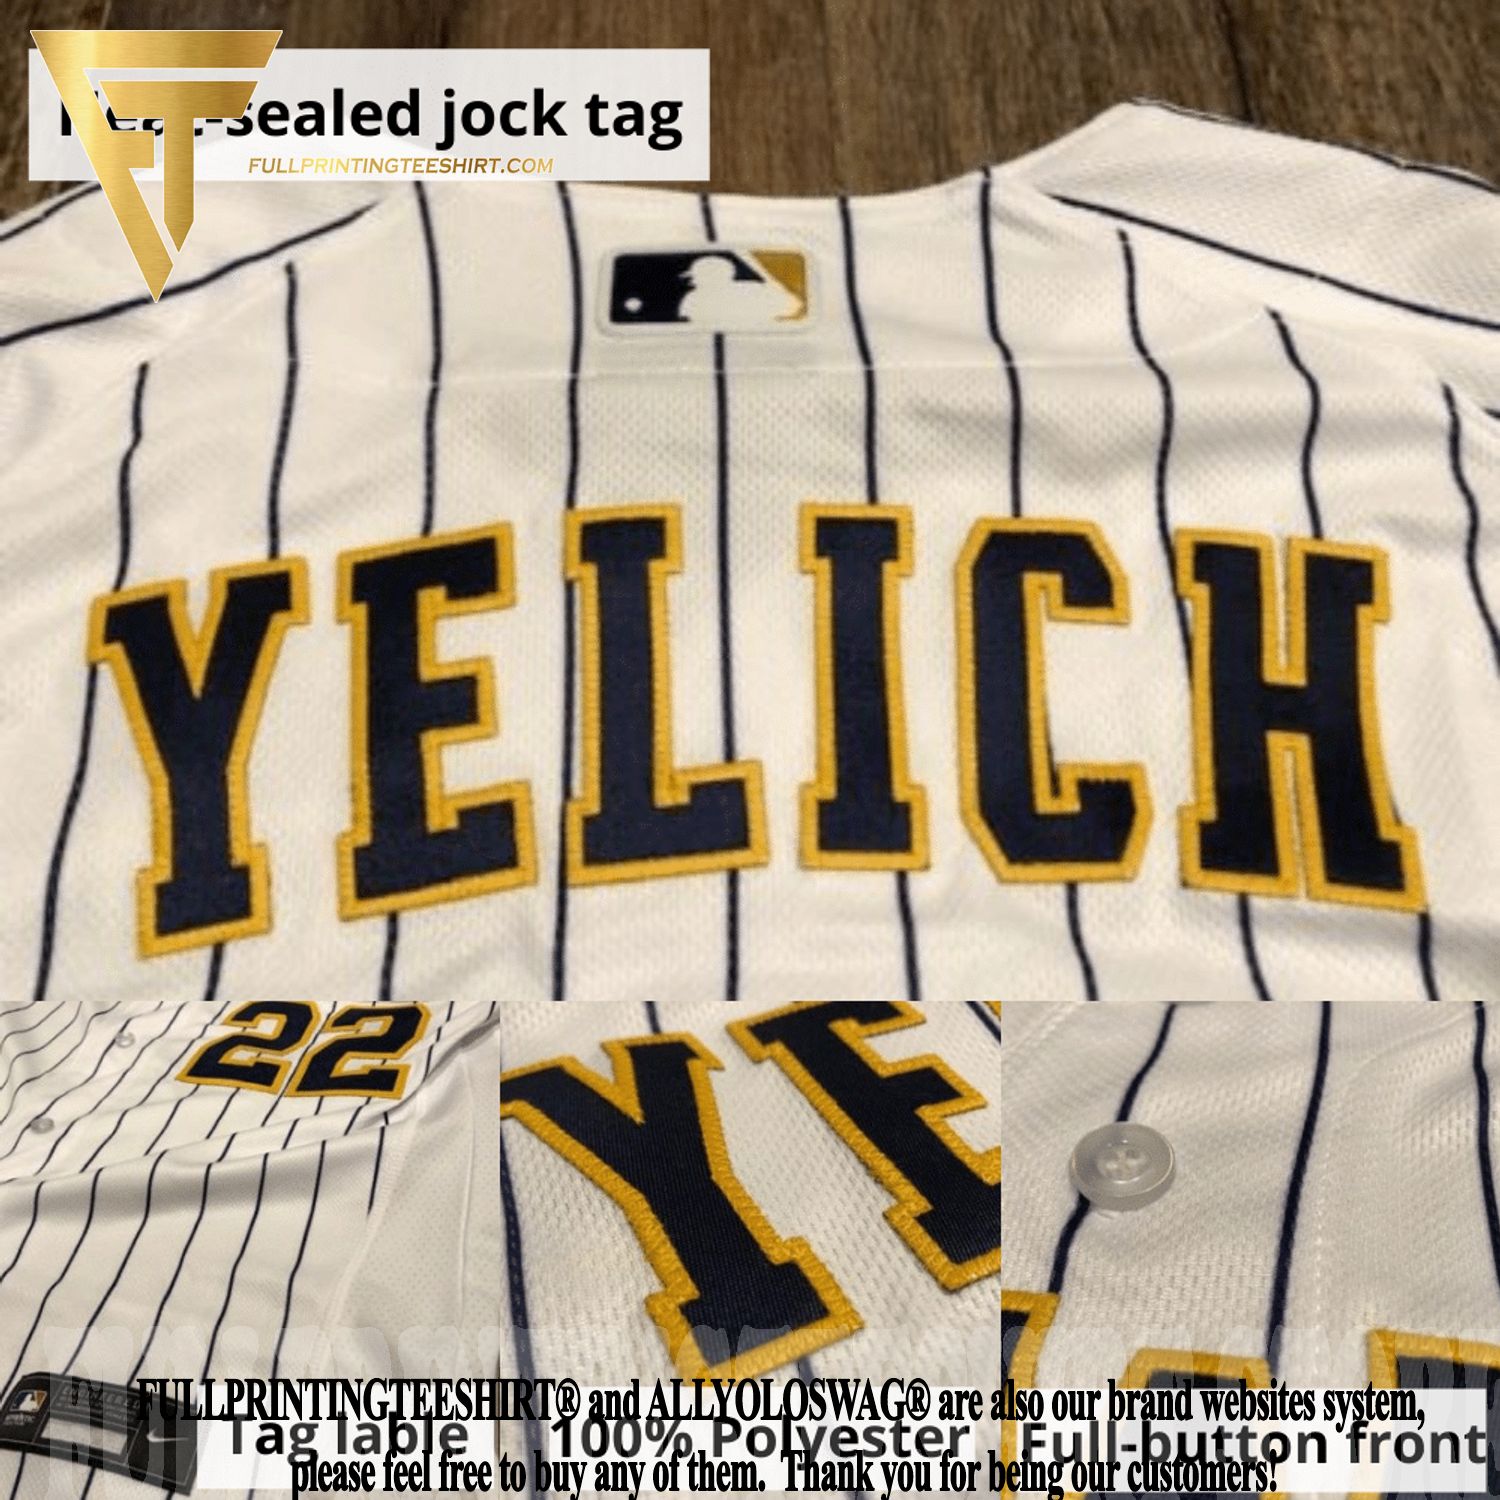 TRENDING] Kansas City Royals MLB-Personalized Hawaiian Shirt